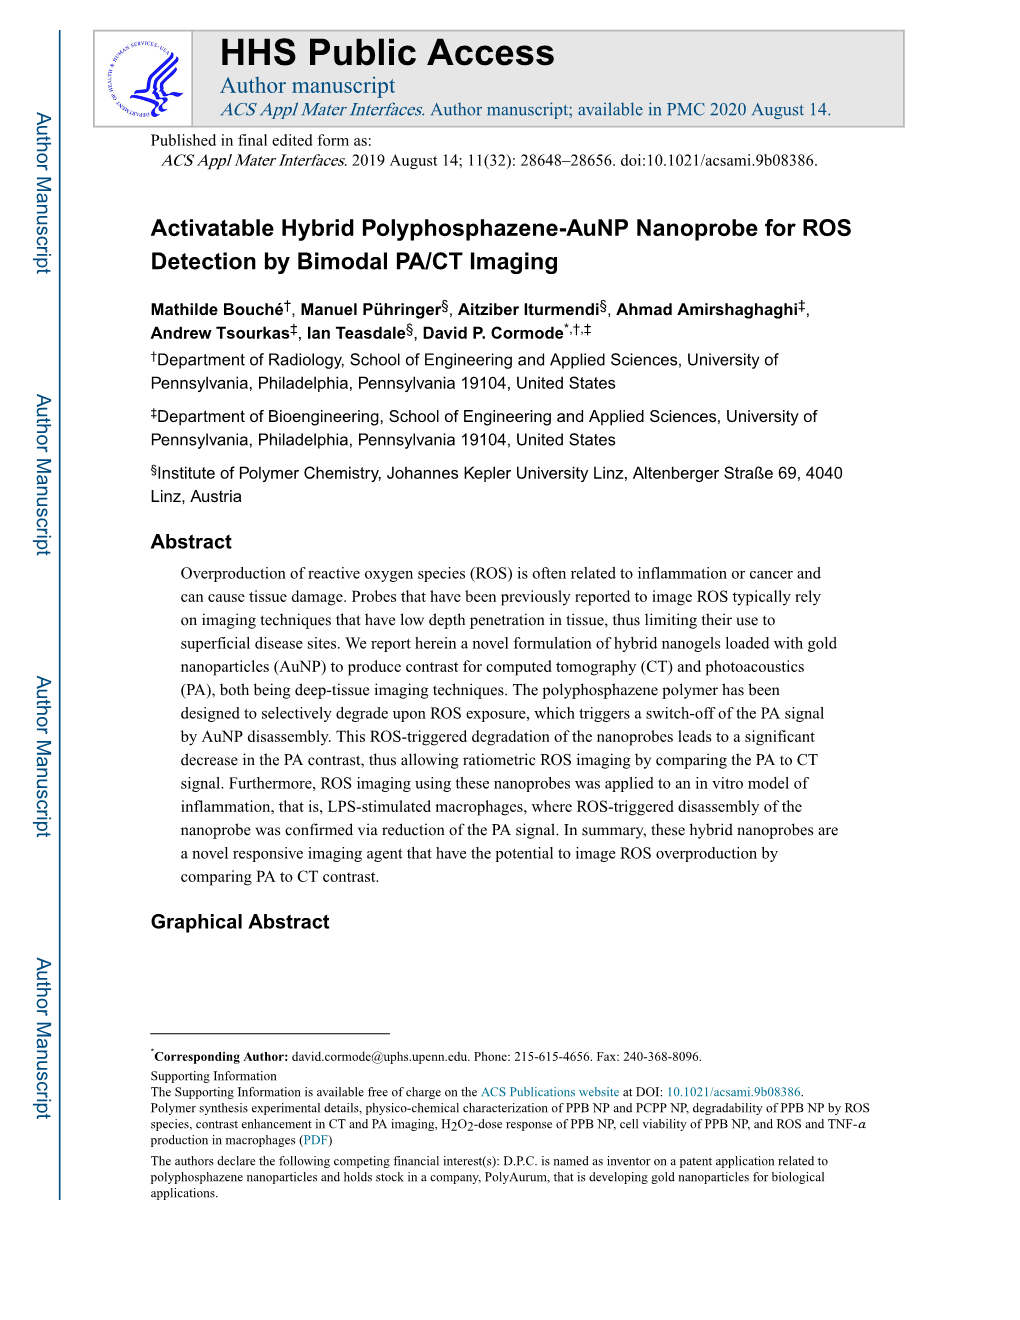 Activatable Hybrid Polyphosphazene-Aunp Nanoprobe for ROS Detection by Bimodal PA/CT Imaging